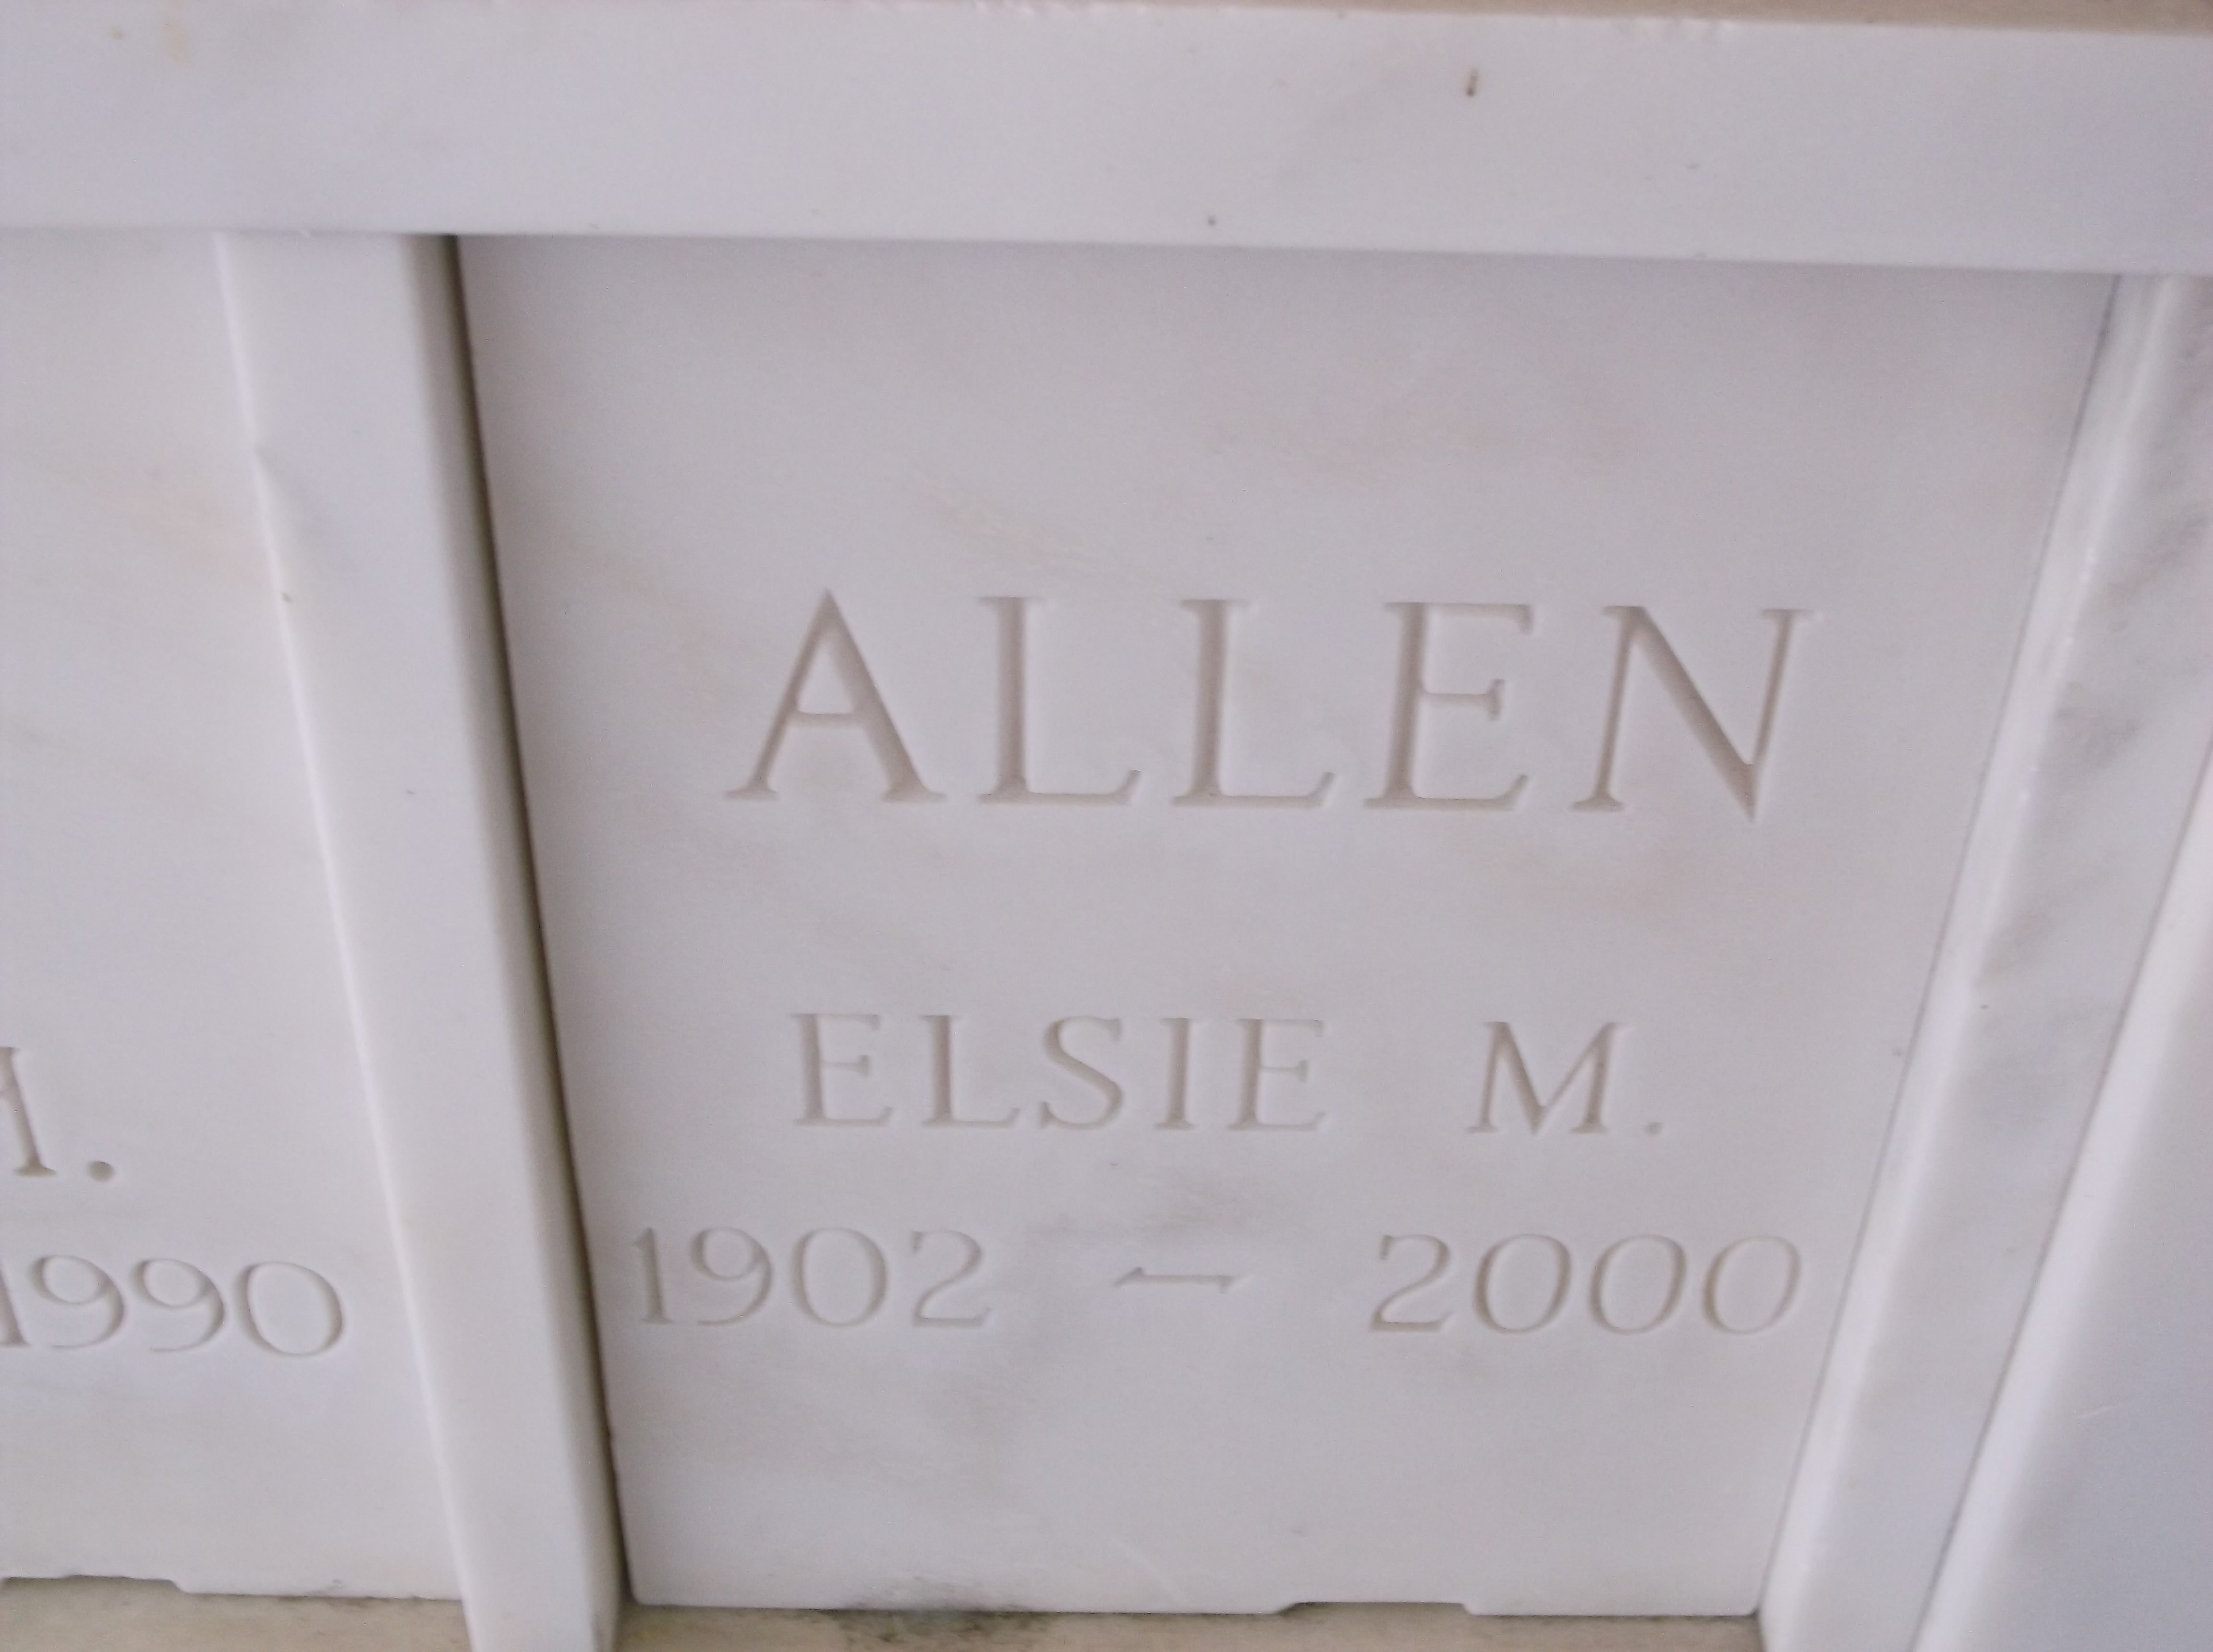 Elsie M Allen